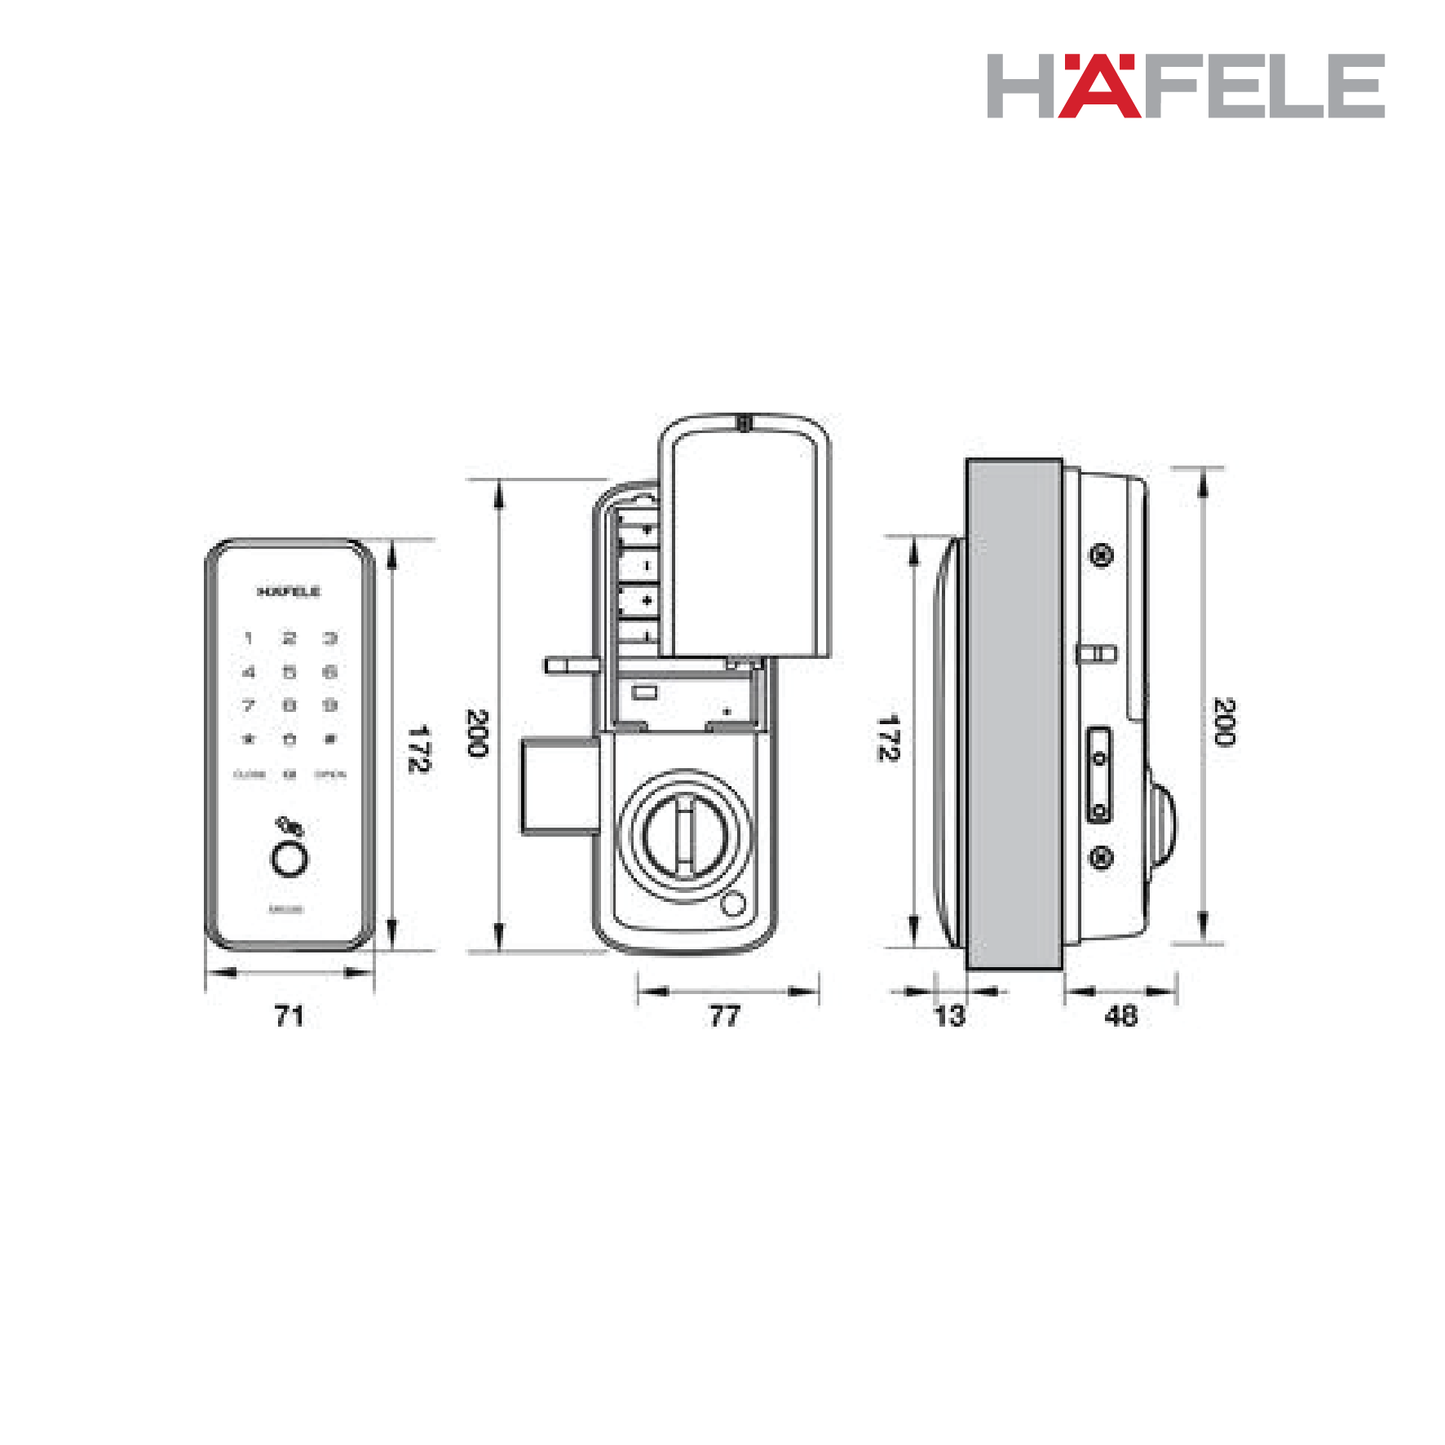 Hafele-Digital-Lock-ER5100-Art-No-912.05.319-Spec-01-01-01